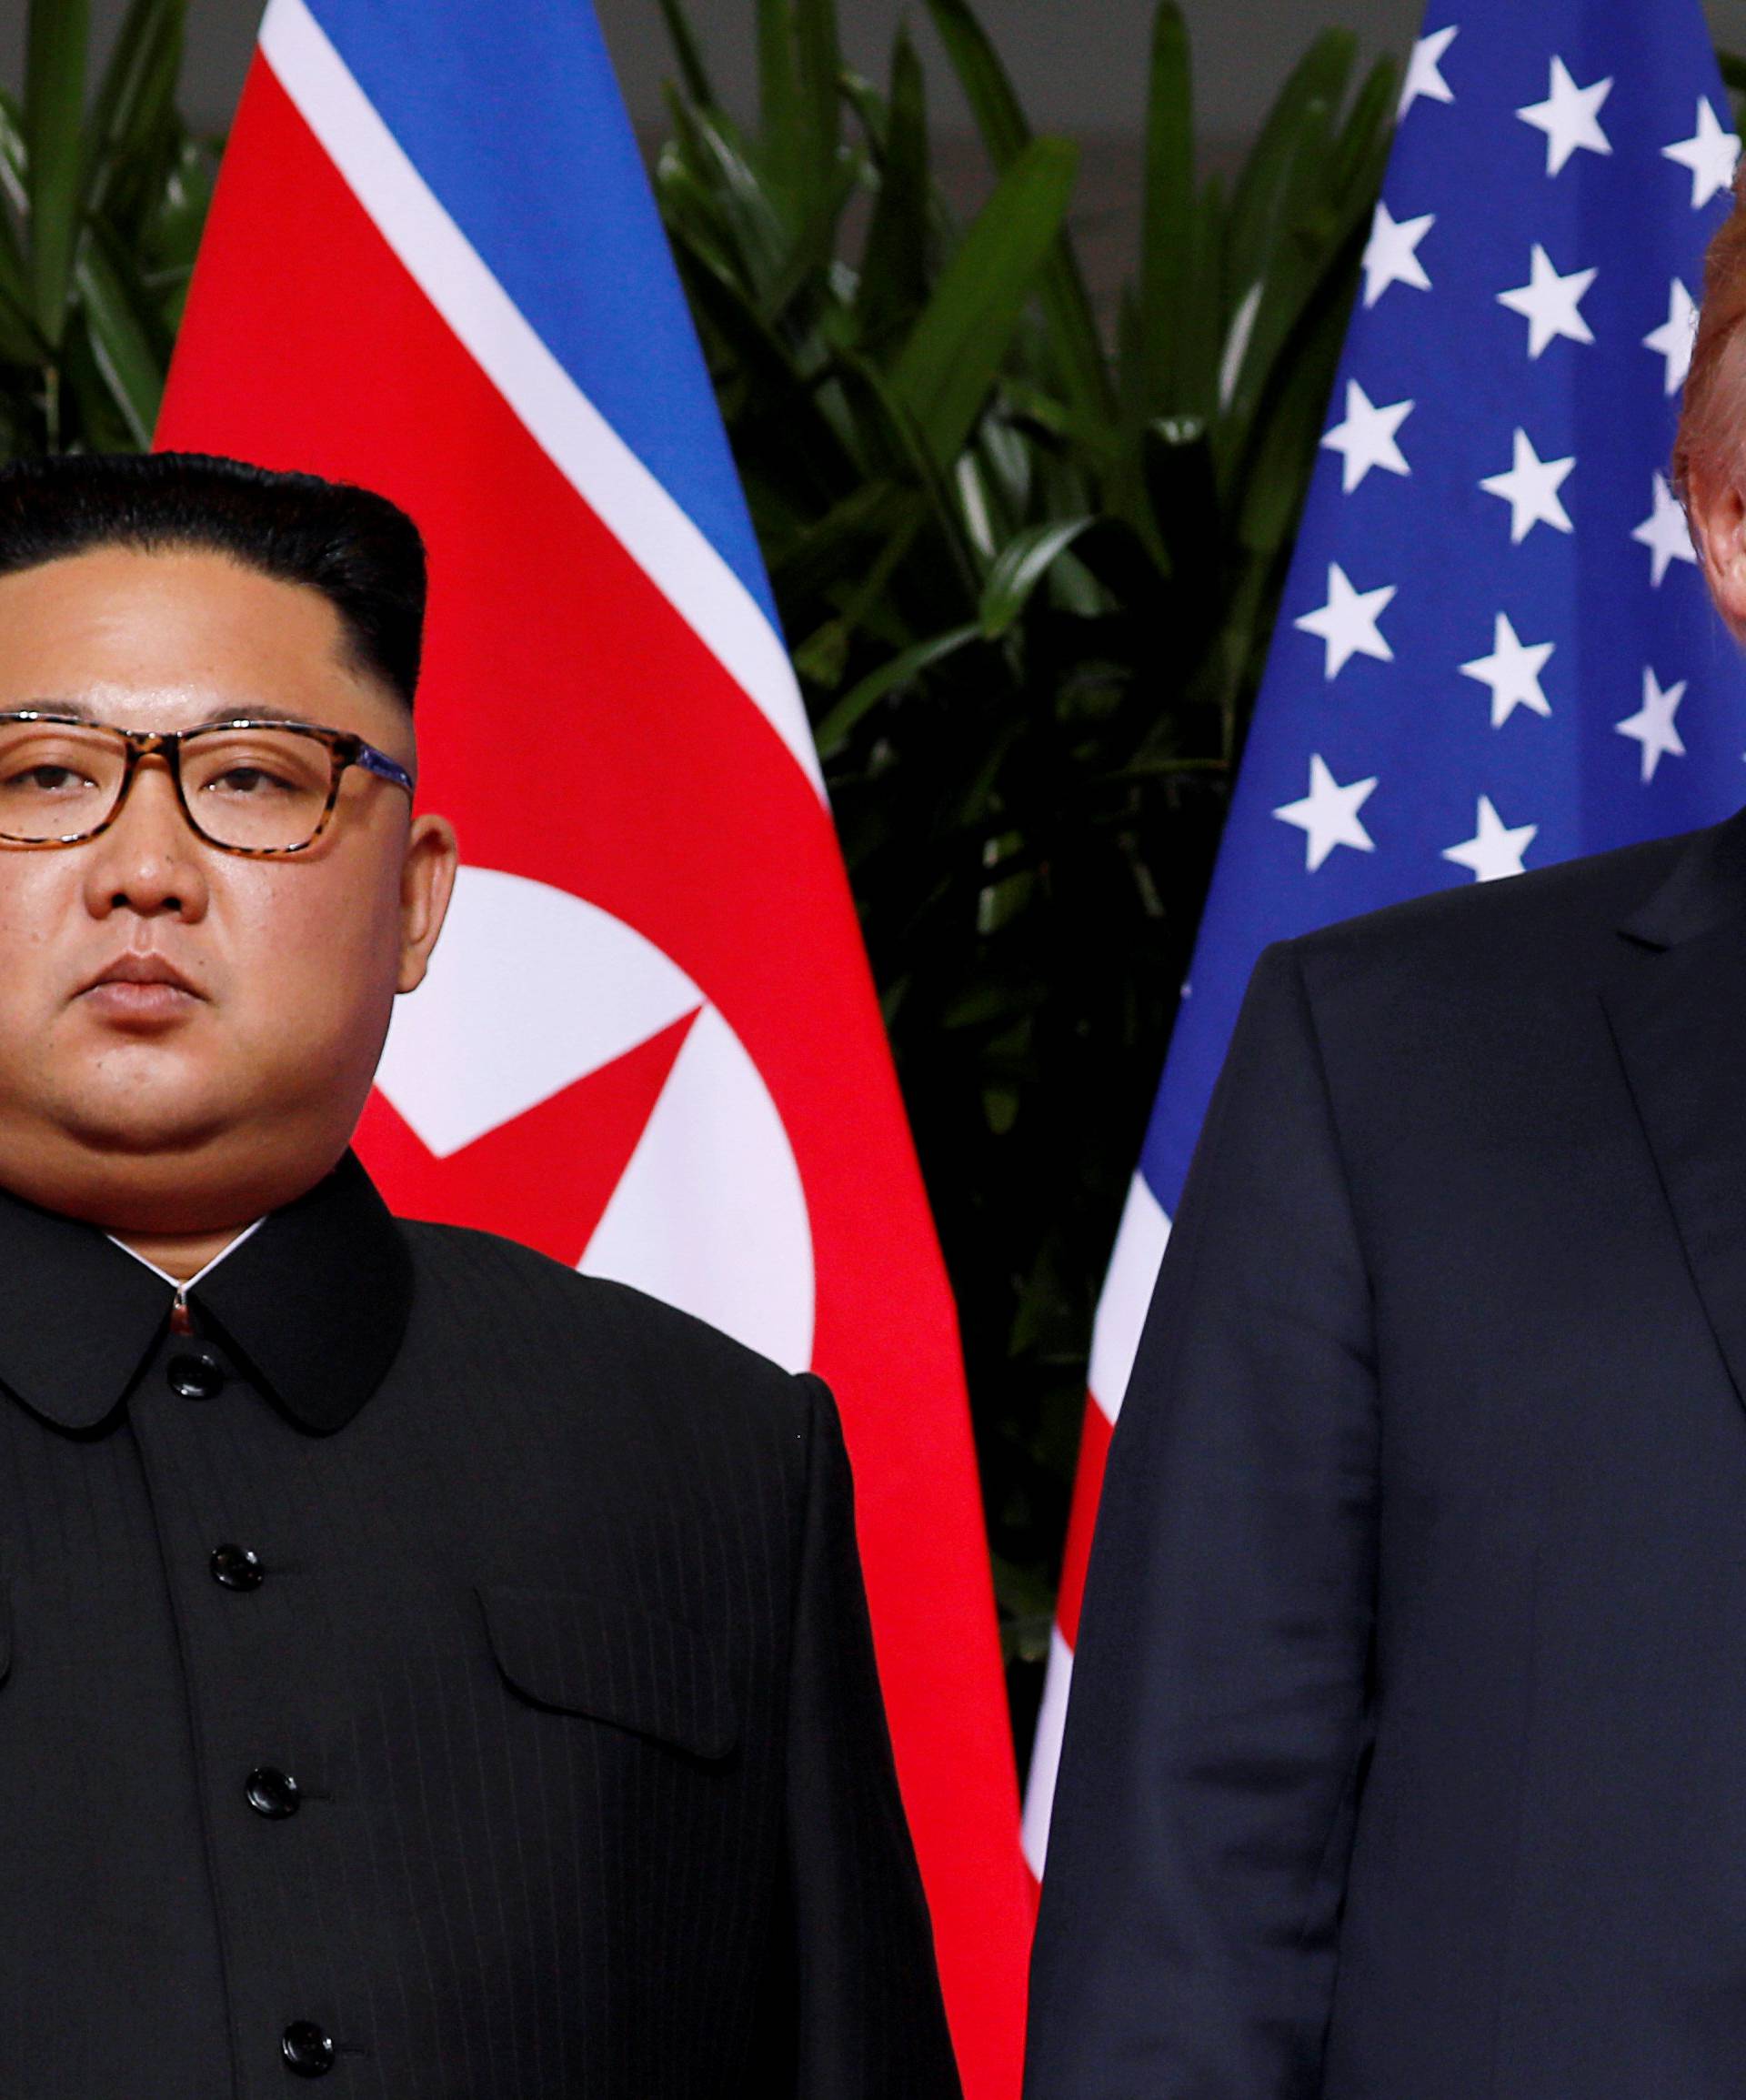 FILE PHOTO: U.S. President Donald Trump and North Korean leader Kim Jong Un react at the Capella Hotel on Sentosa island in Singapore